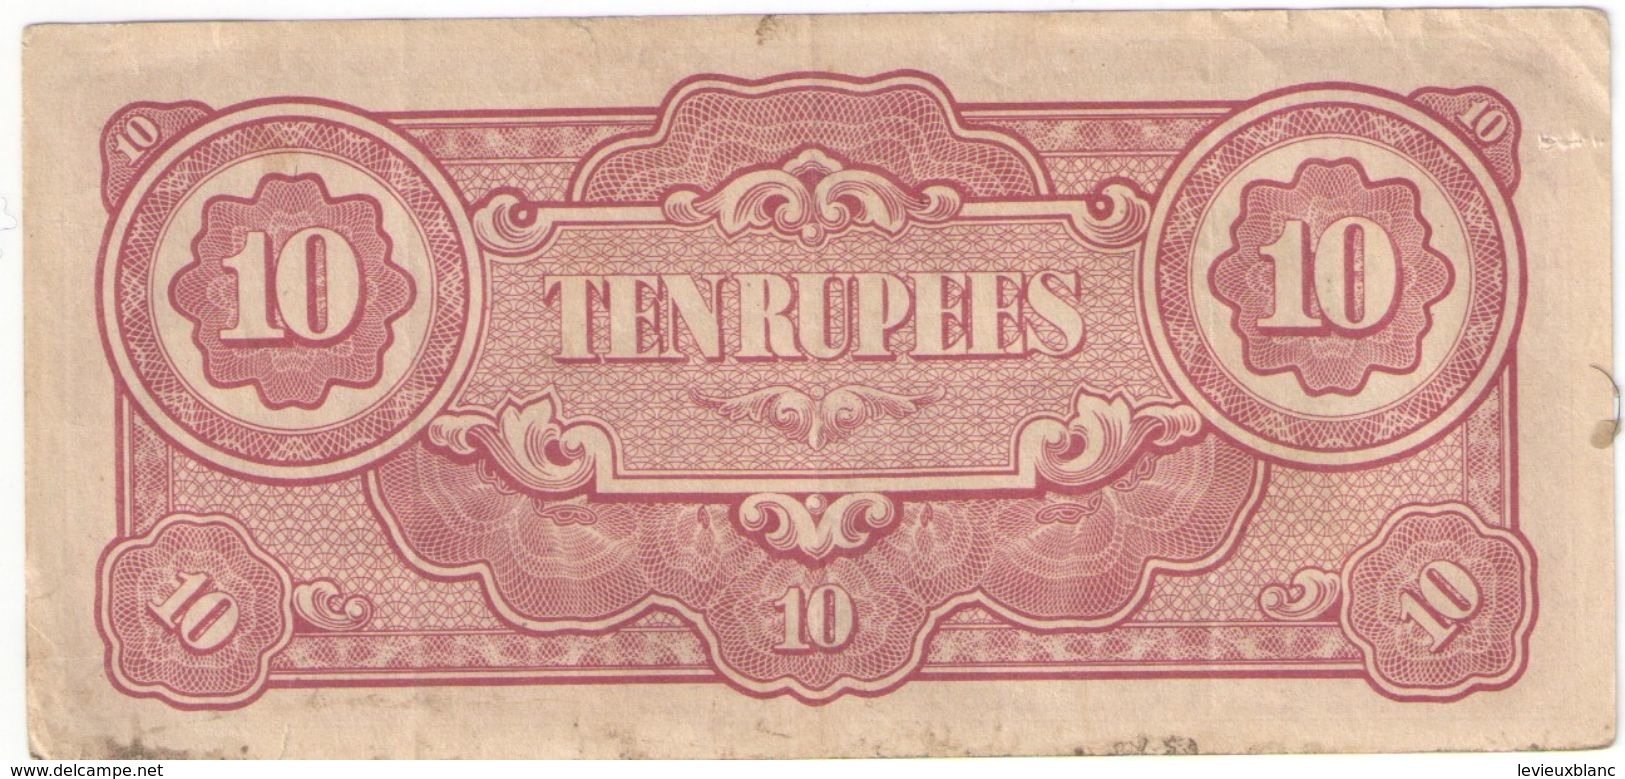 Ten Rupees/ The Japanese Government/Birmanie Occupation Japonaise/Vers 1940-42                  BILL184bis - Japon